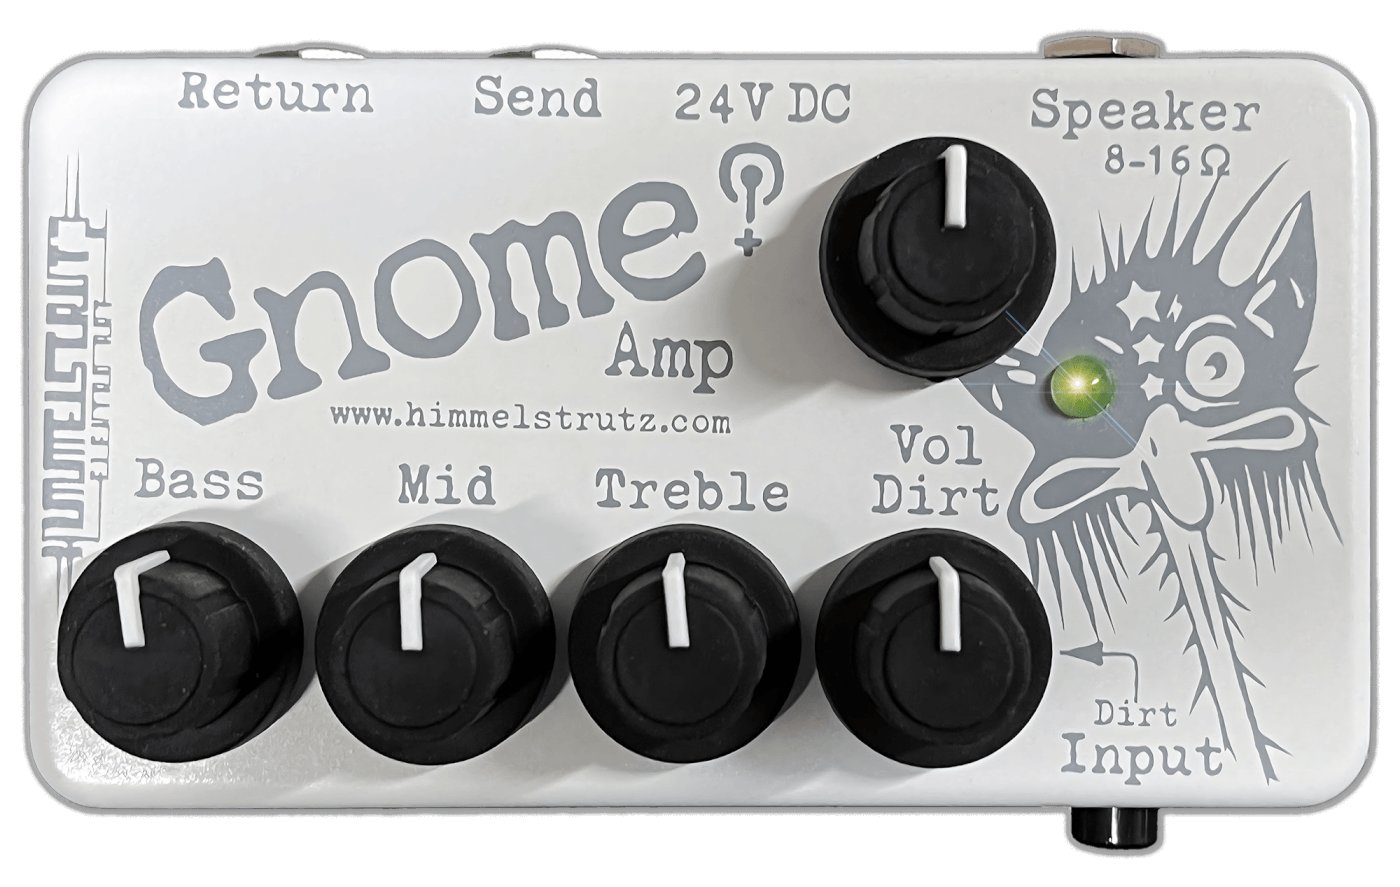 The GNOME—Swedish Analog Rock Beast!